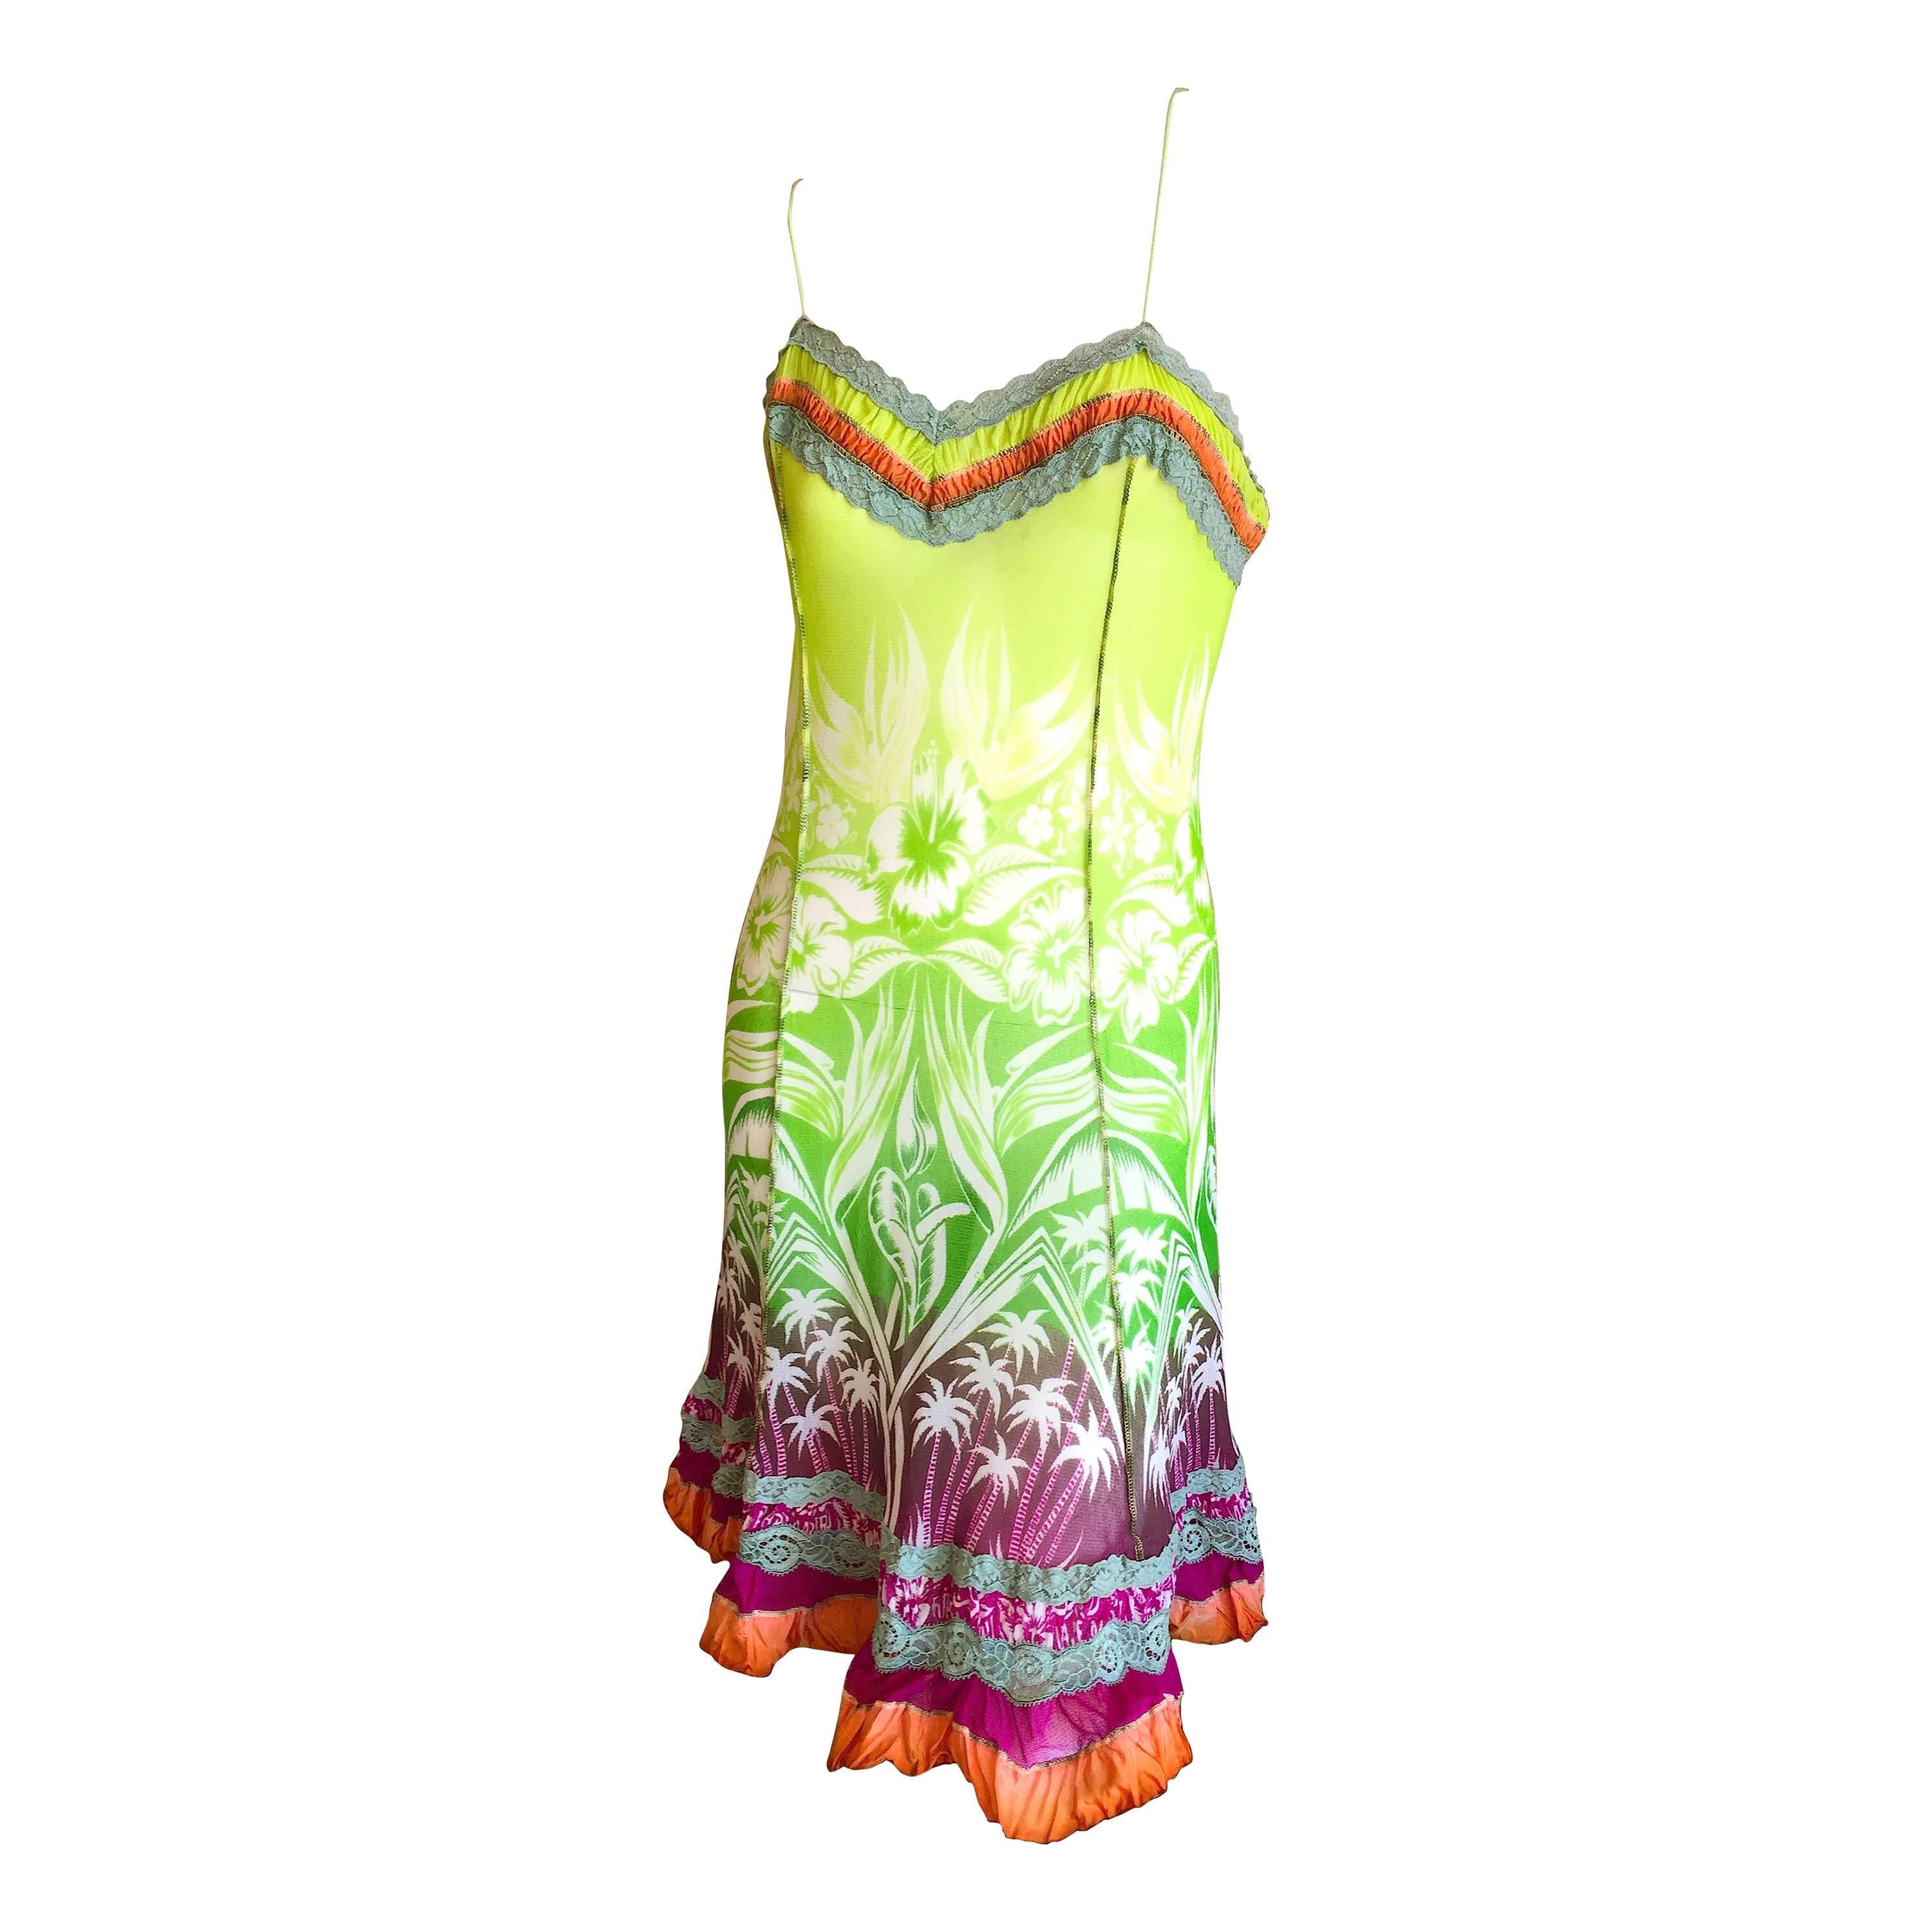 Jean Paul Gaultier Festive Slip Dress with Colorful Ruffles